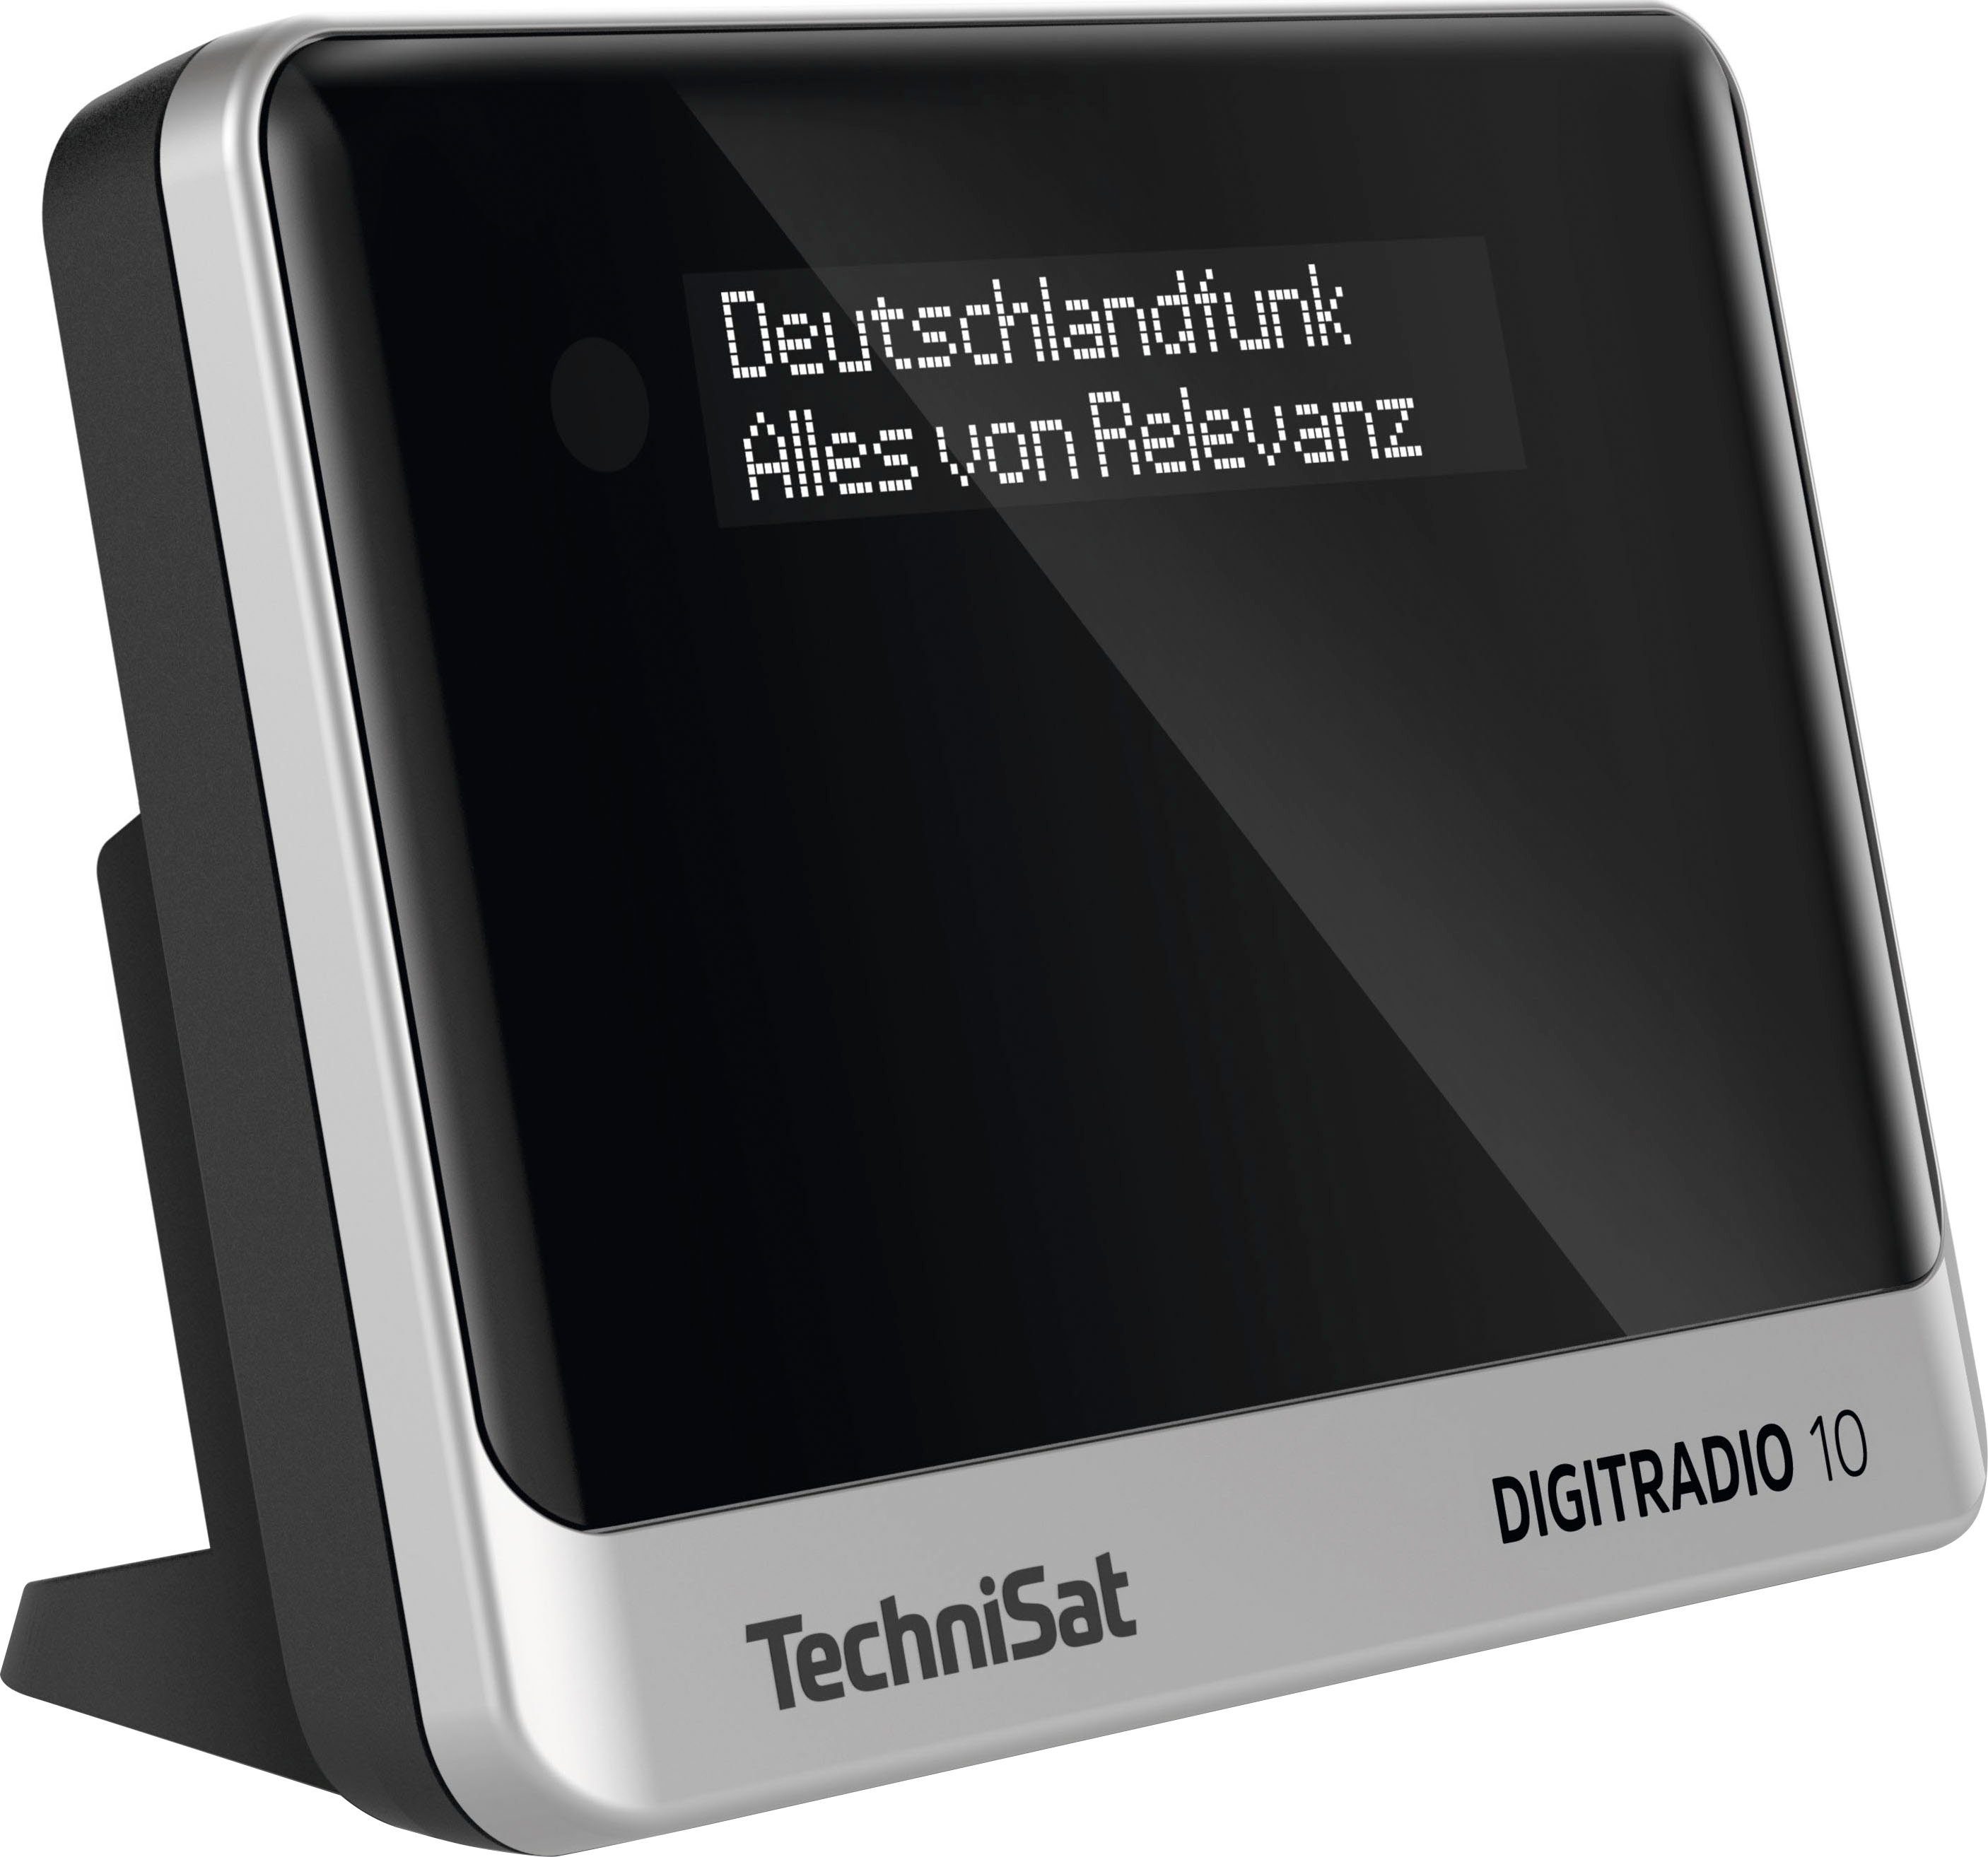 (DAB) (UKW 10 Digitalradio RDS) DIGITRADIO mit TechniSat